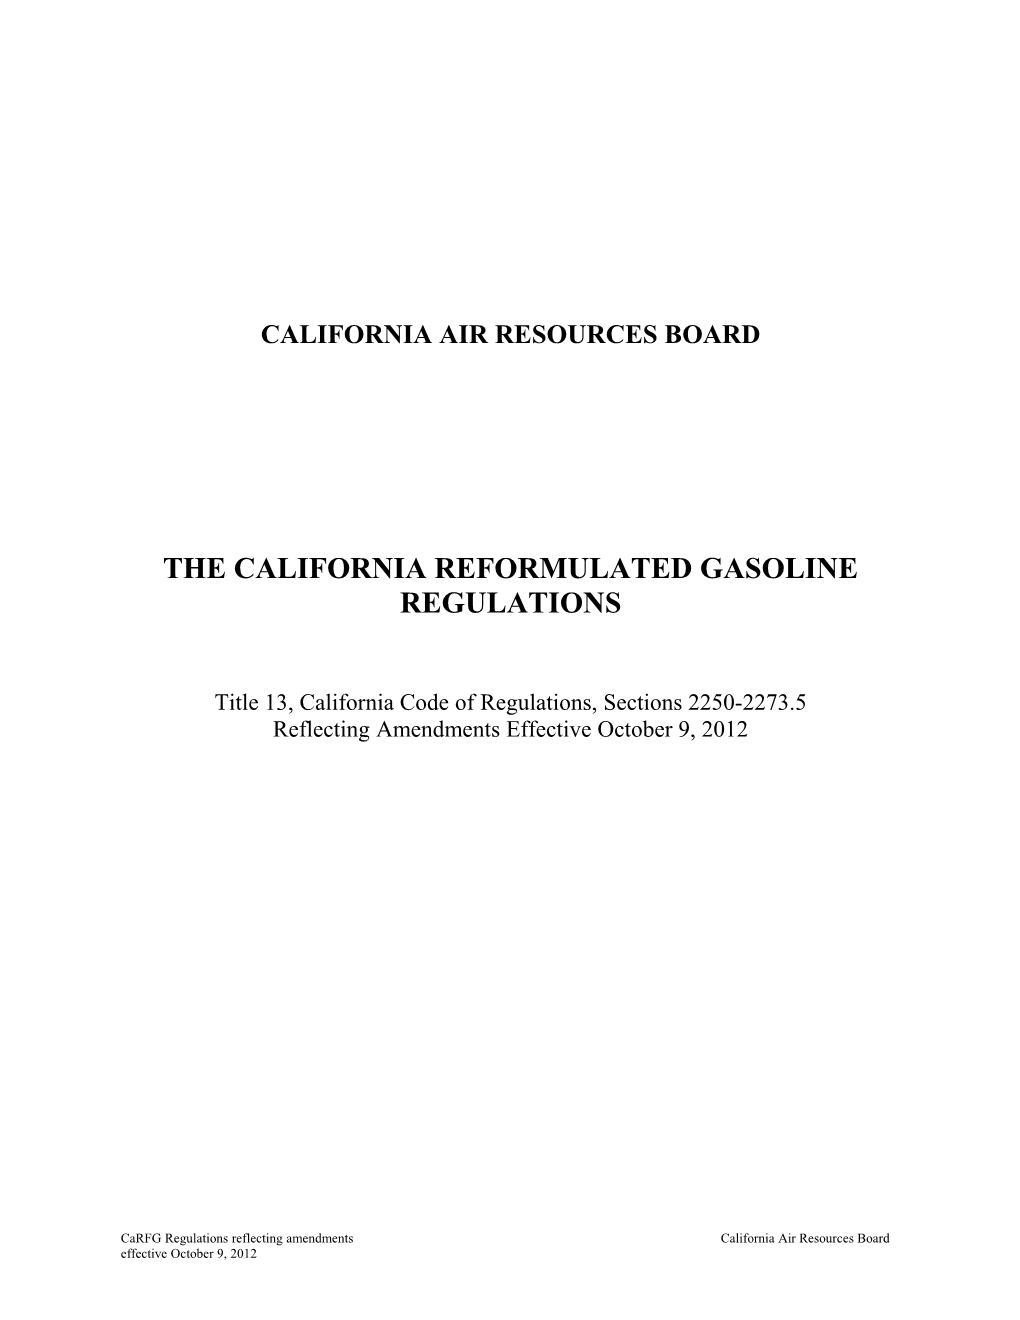 California Air Resources Board s1